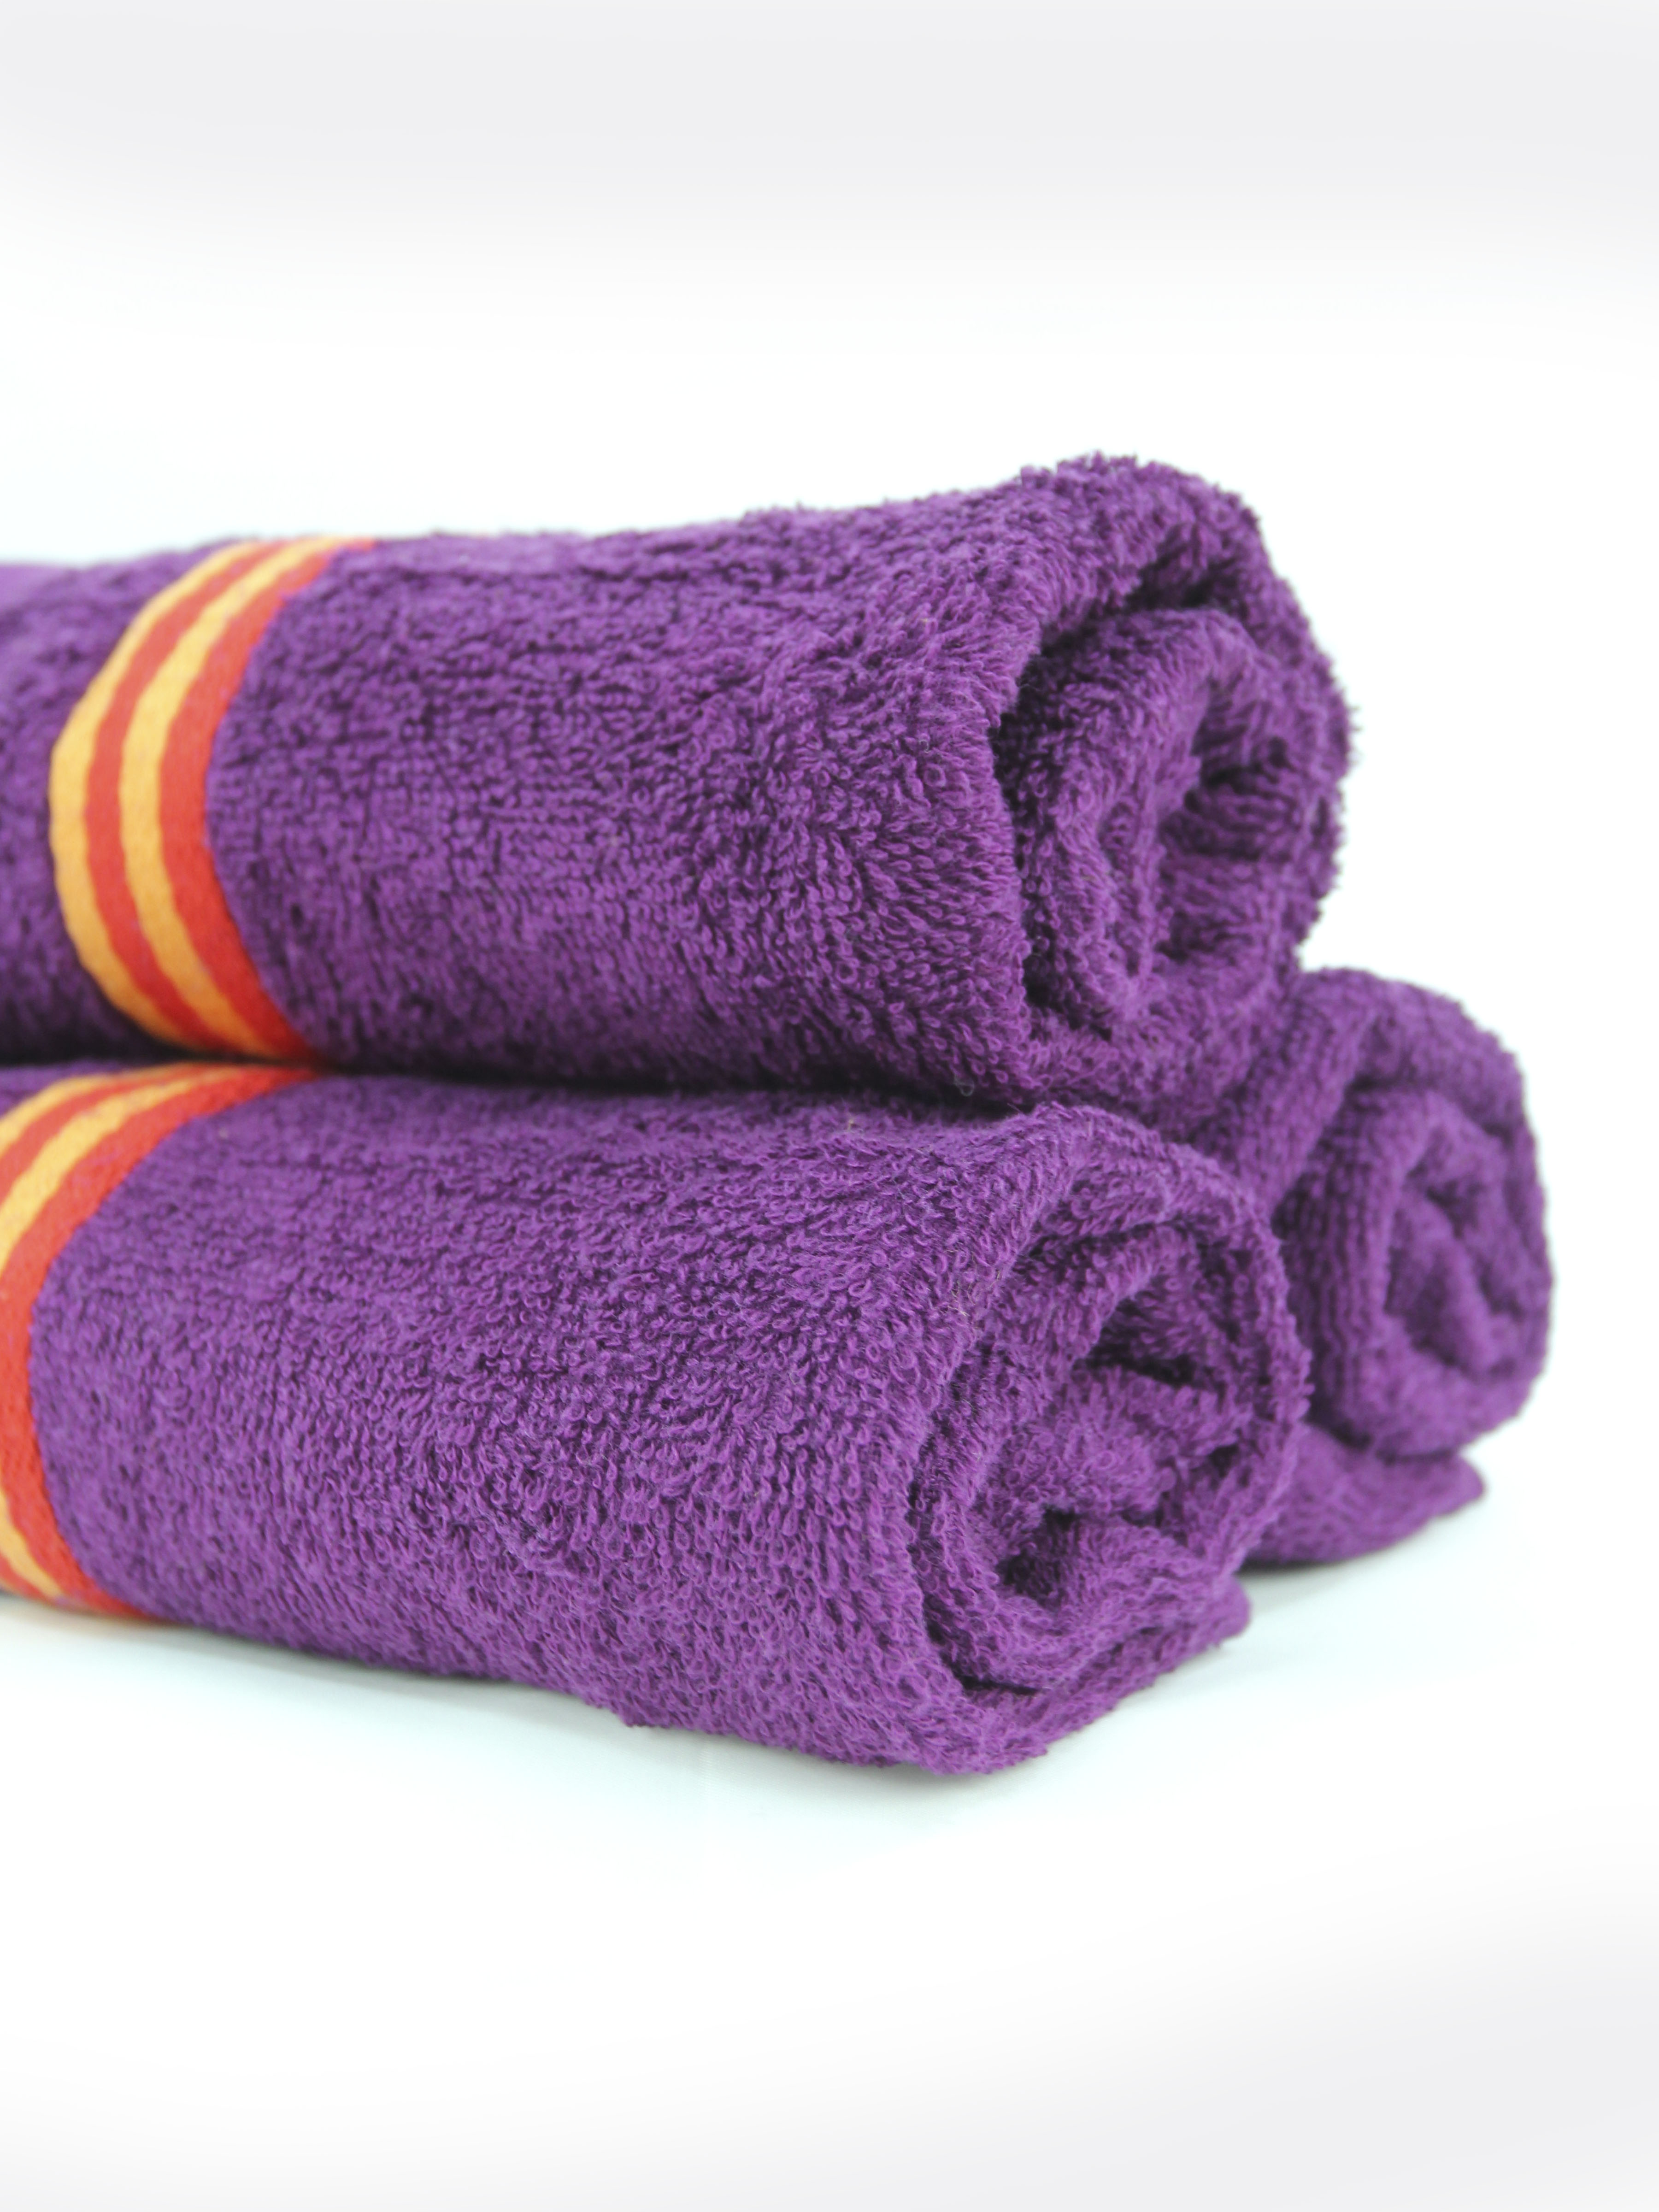 Фиолетовое полотенце. Cherir полотенца кухонные. Полотенце фиолетового цвета. Полотенце 40 на 60.